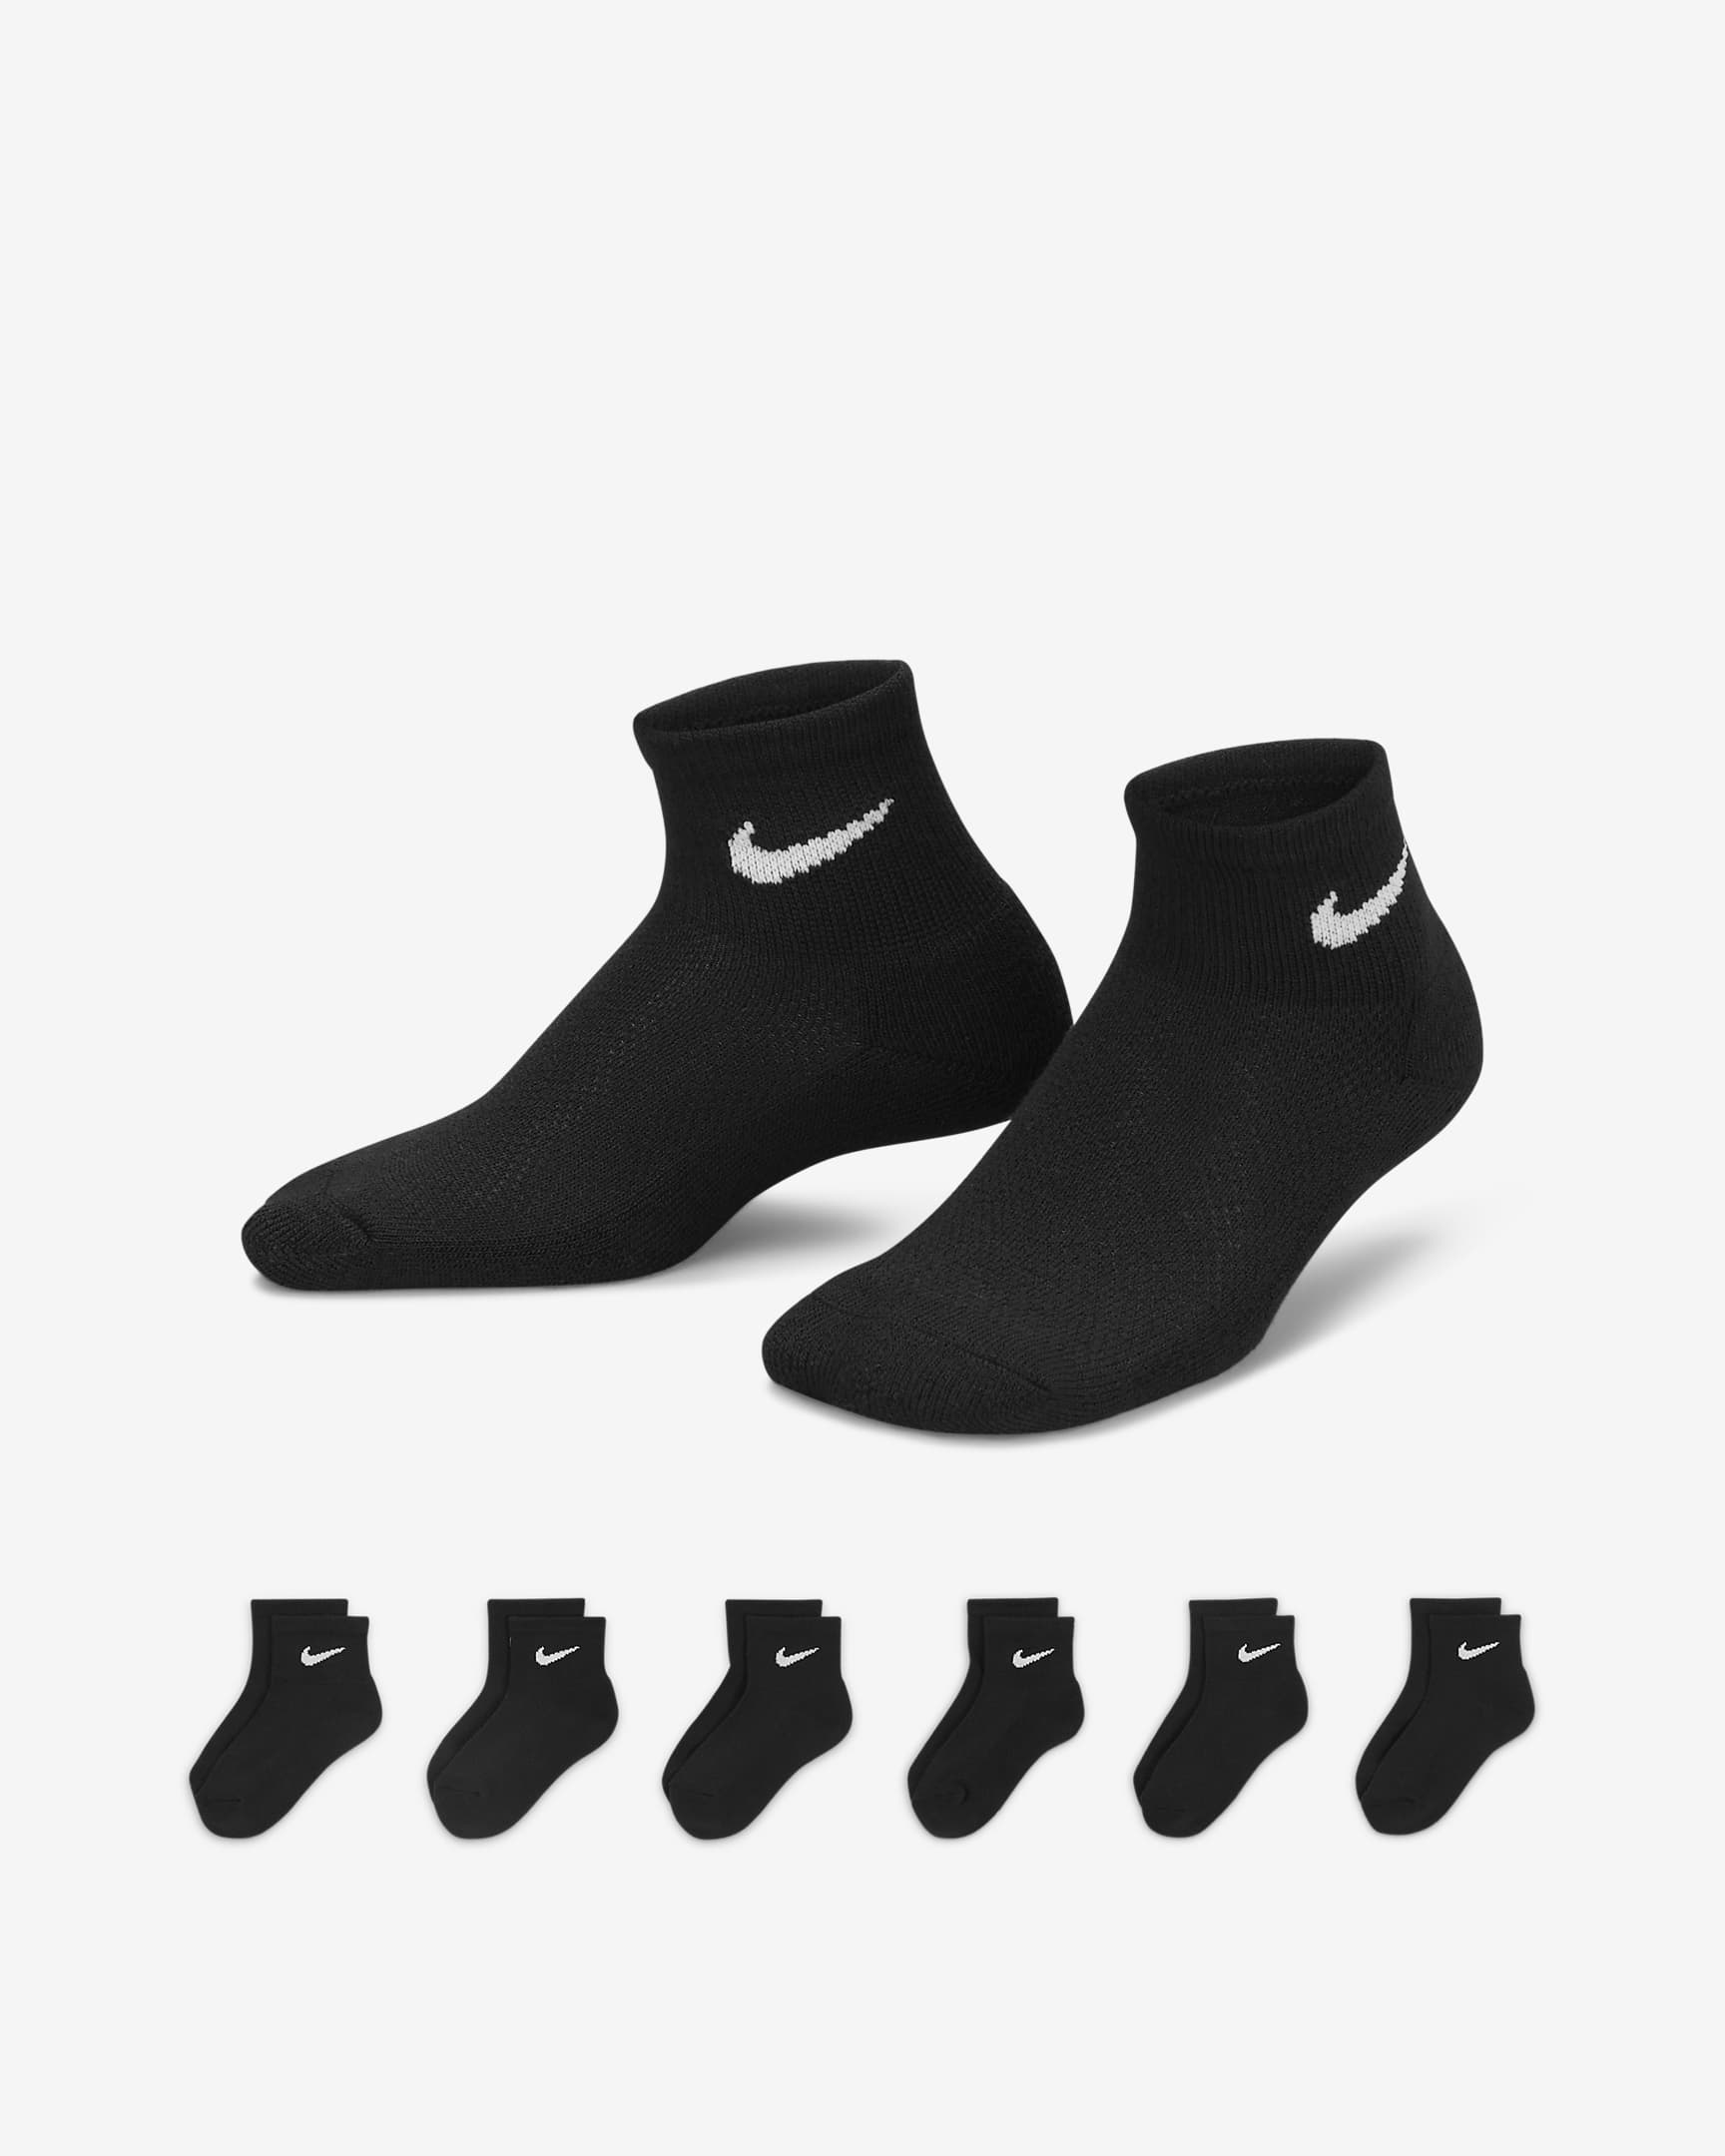 Nike Mesh and Cushioned Little Kids' Ankle Socks (6 Pairs). Nike.com